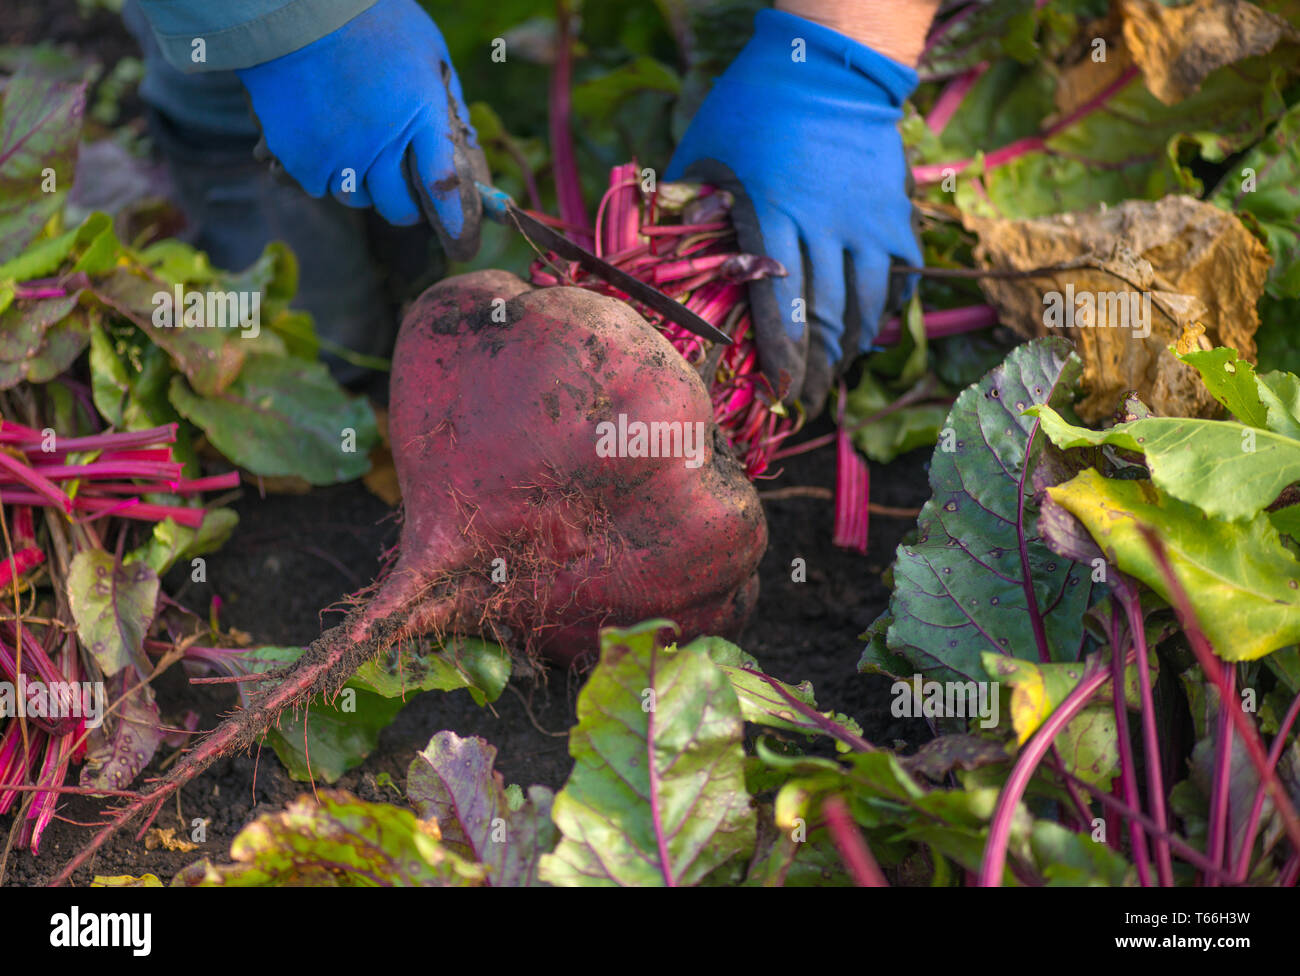 Sugar beet root crop in the ground, selective focus. Beetroot. Simply beet. Table beet. Garden beet. Harvest. Stock Photo